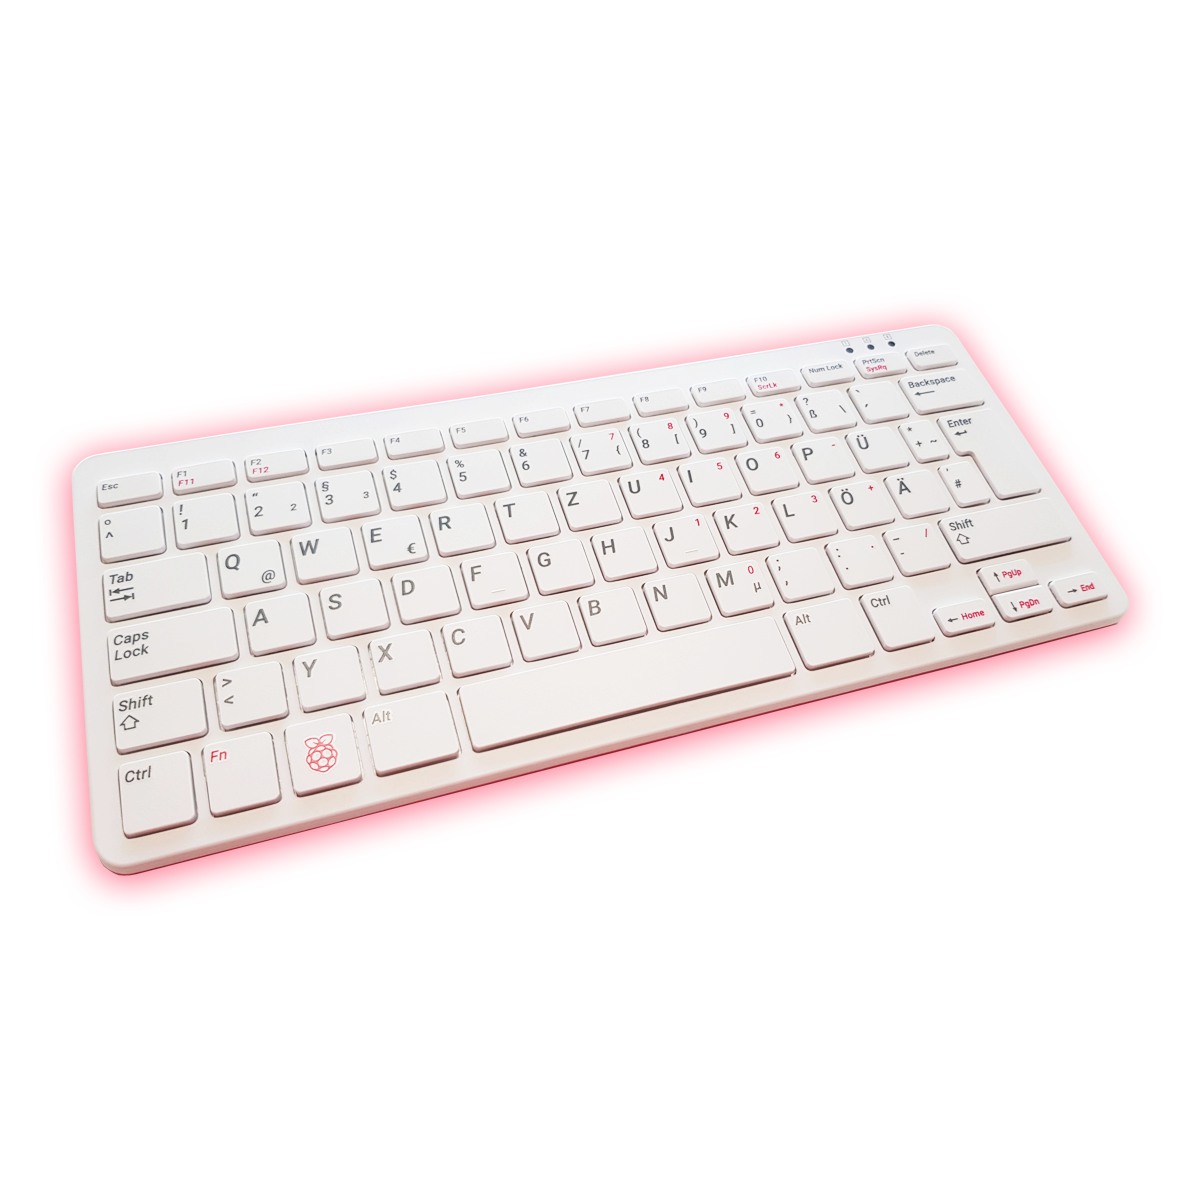 offizielle Raspberry Pi Tastatur weiß/rot